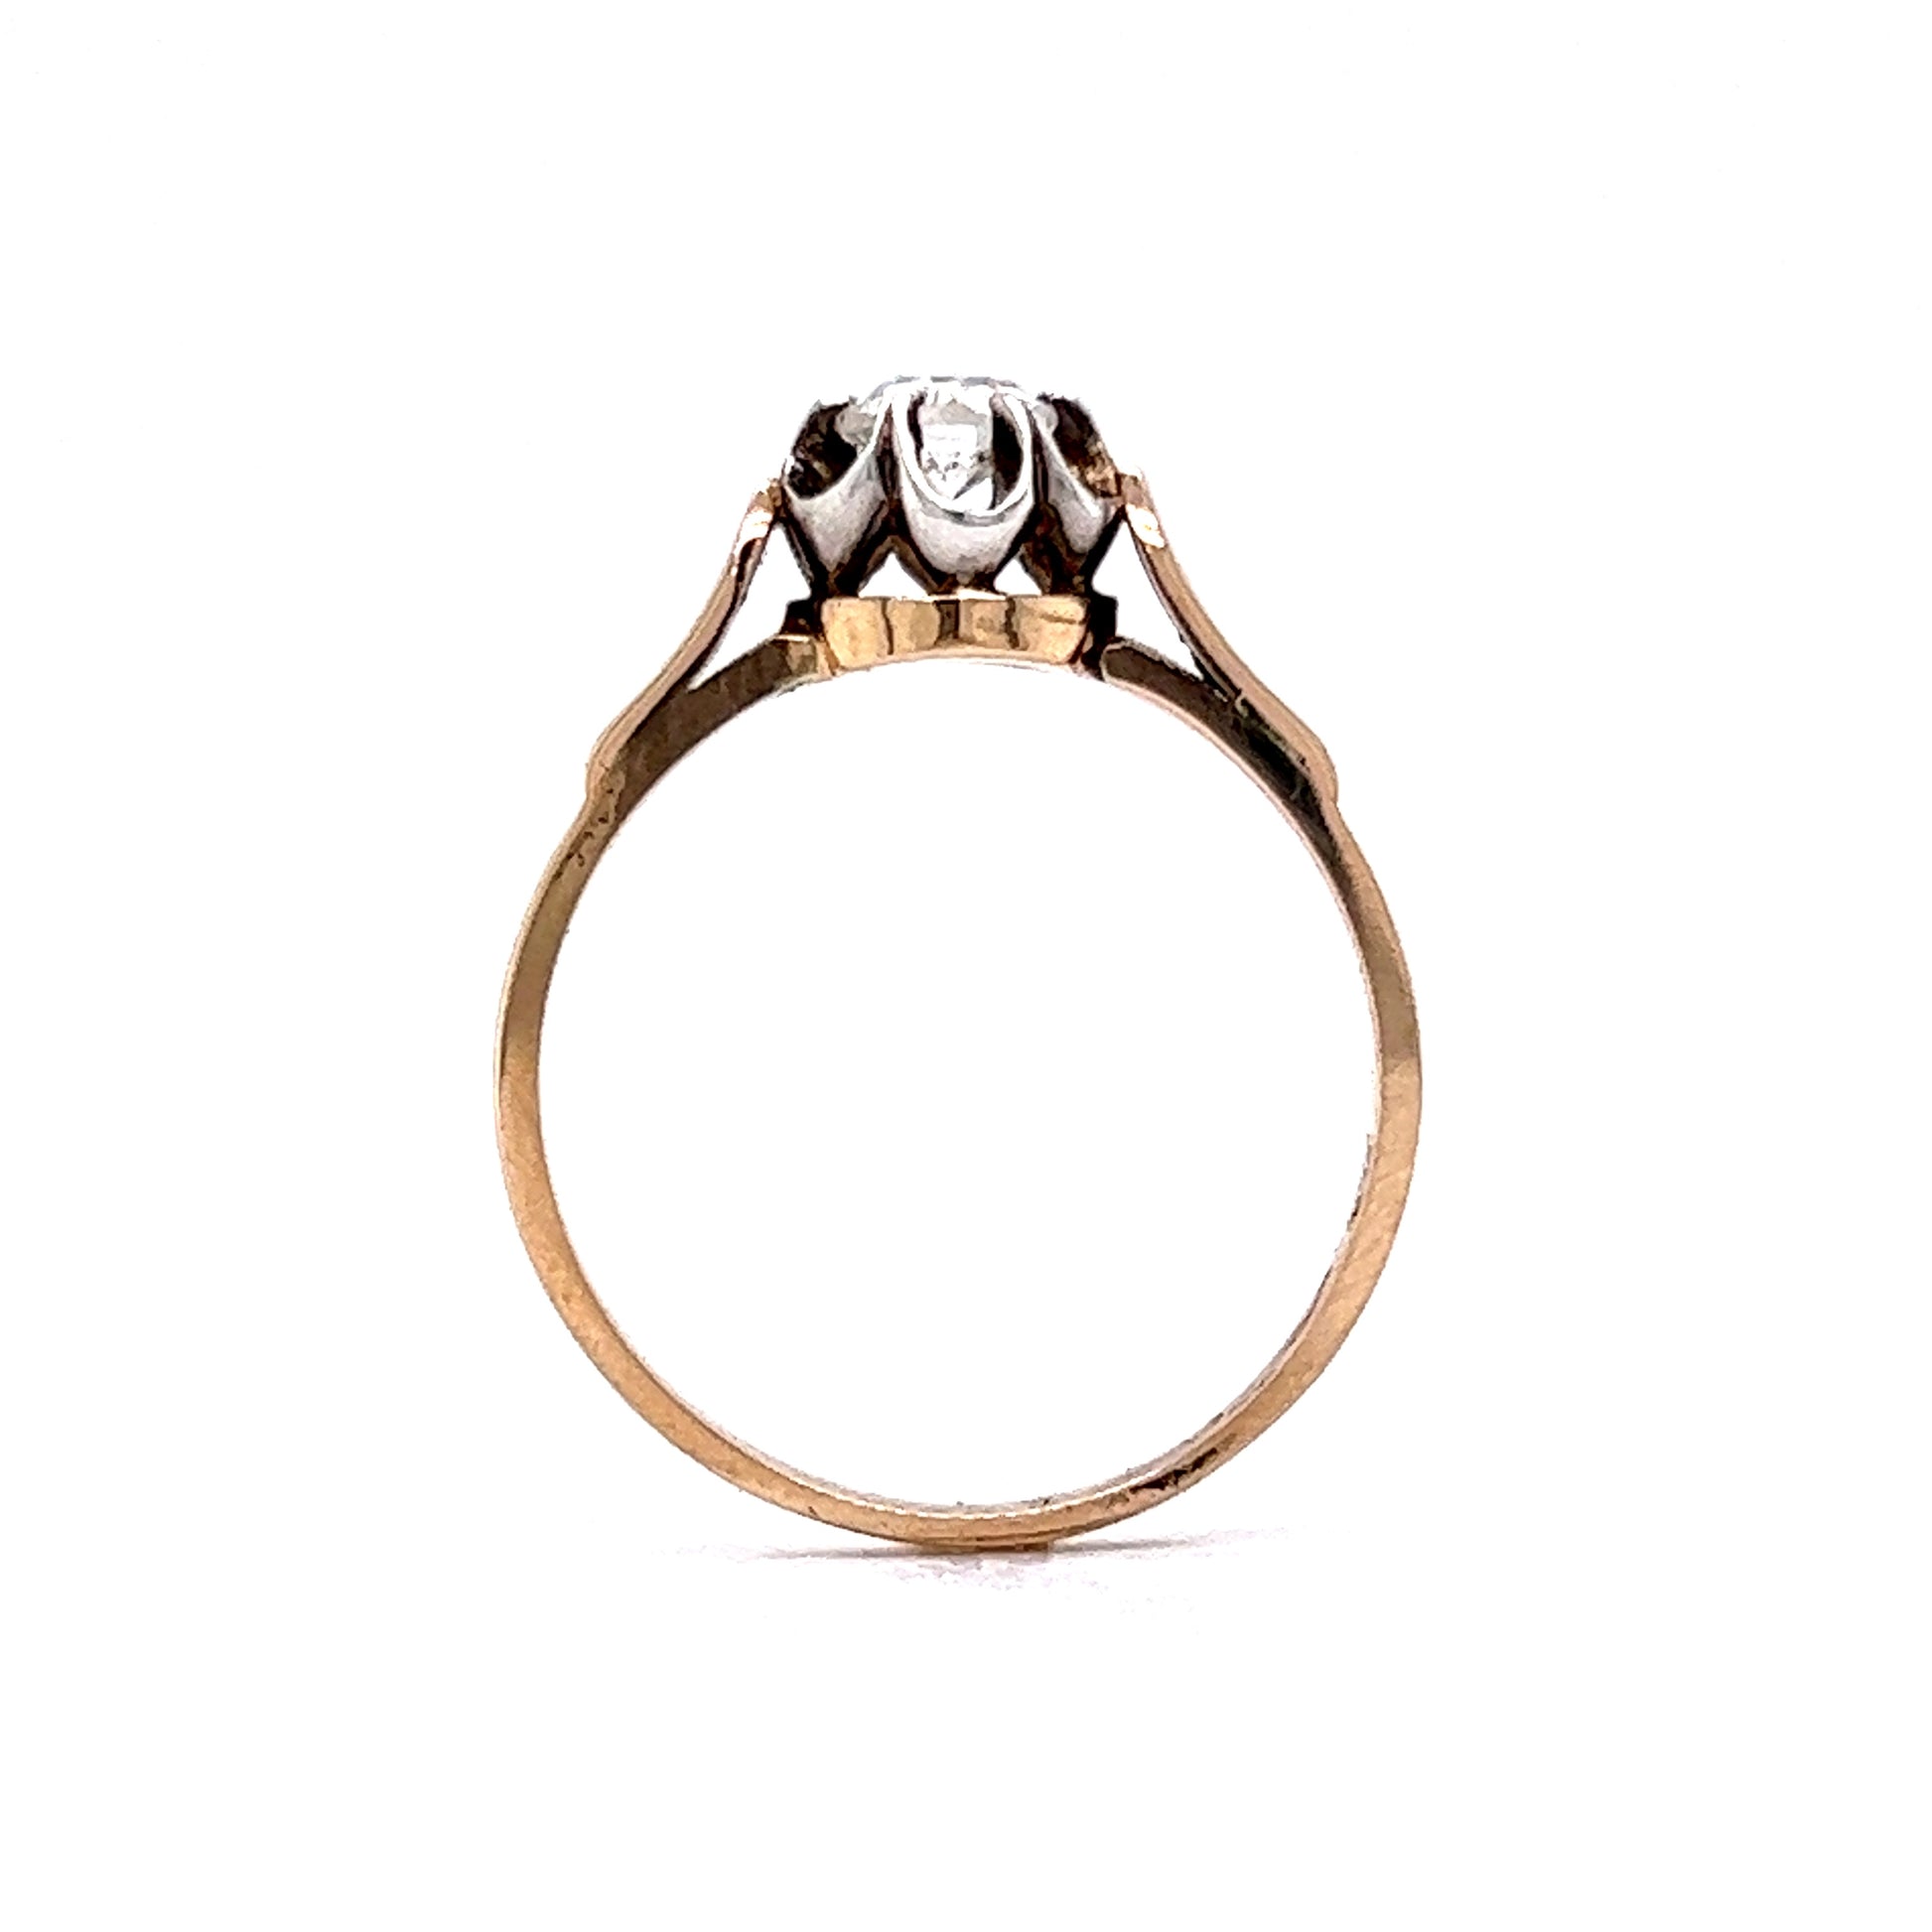 .36 Victorian Solitaire Diamond Engagement Ring in 18K Rose GoldComposition: 14 Karat White Gold/18 Karat Rose Gold Ring Size: 7 Total Diamond Weight: .36ct Total Gram Weight: 2.9 g Inscription: WK
      